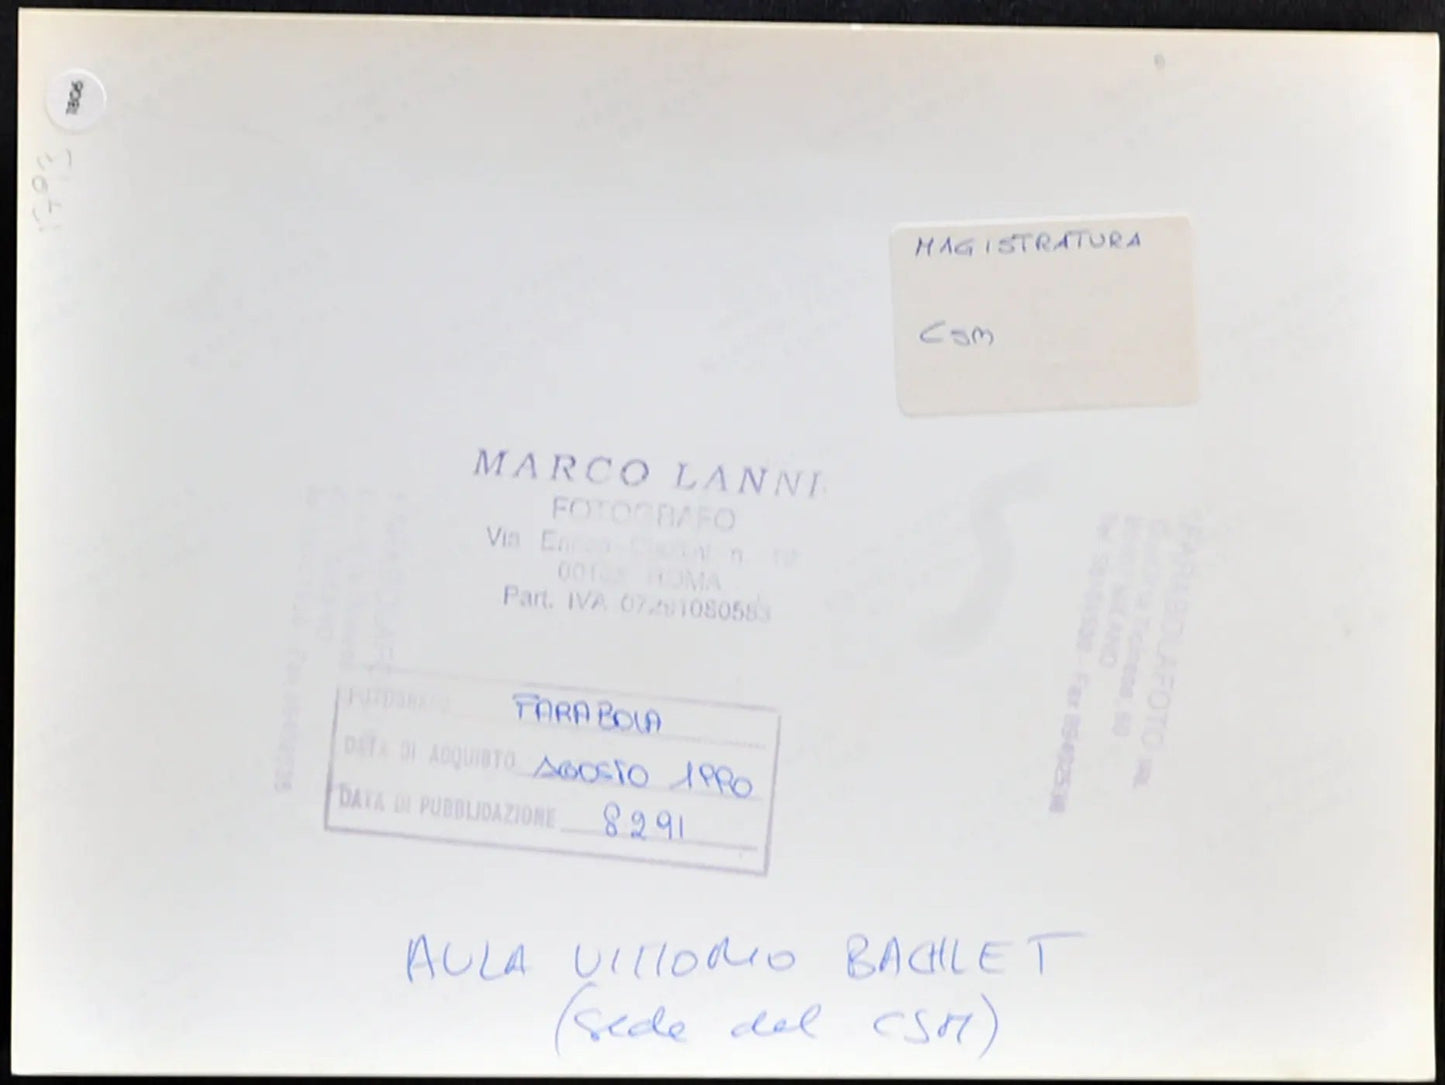 Aula Bachelet sede CSM anni 90 Ft 1806 - Stampa 24x18 cm - Farabola Stampa ai sali d'argento